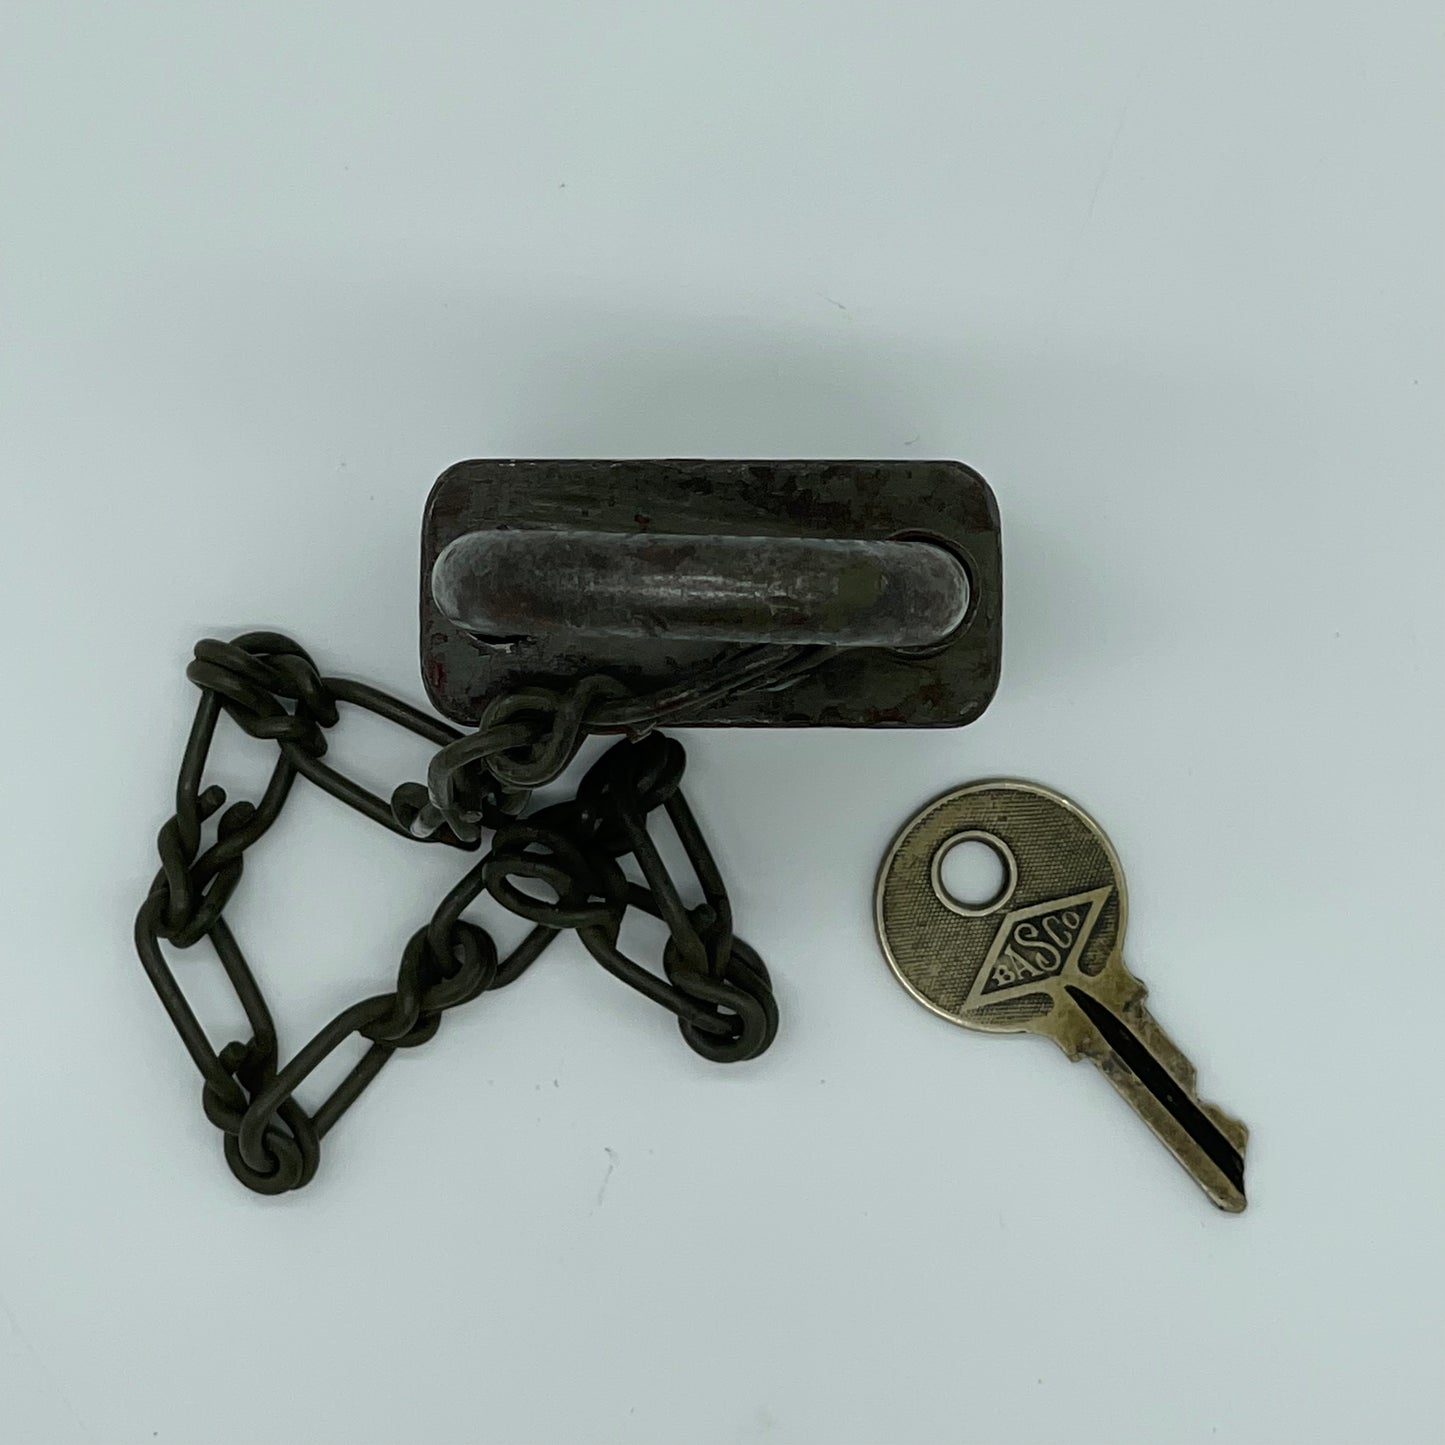 Vintage Yale Military Lock with Key (Item Number 0015)